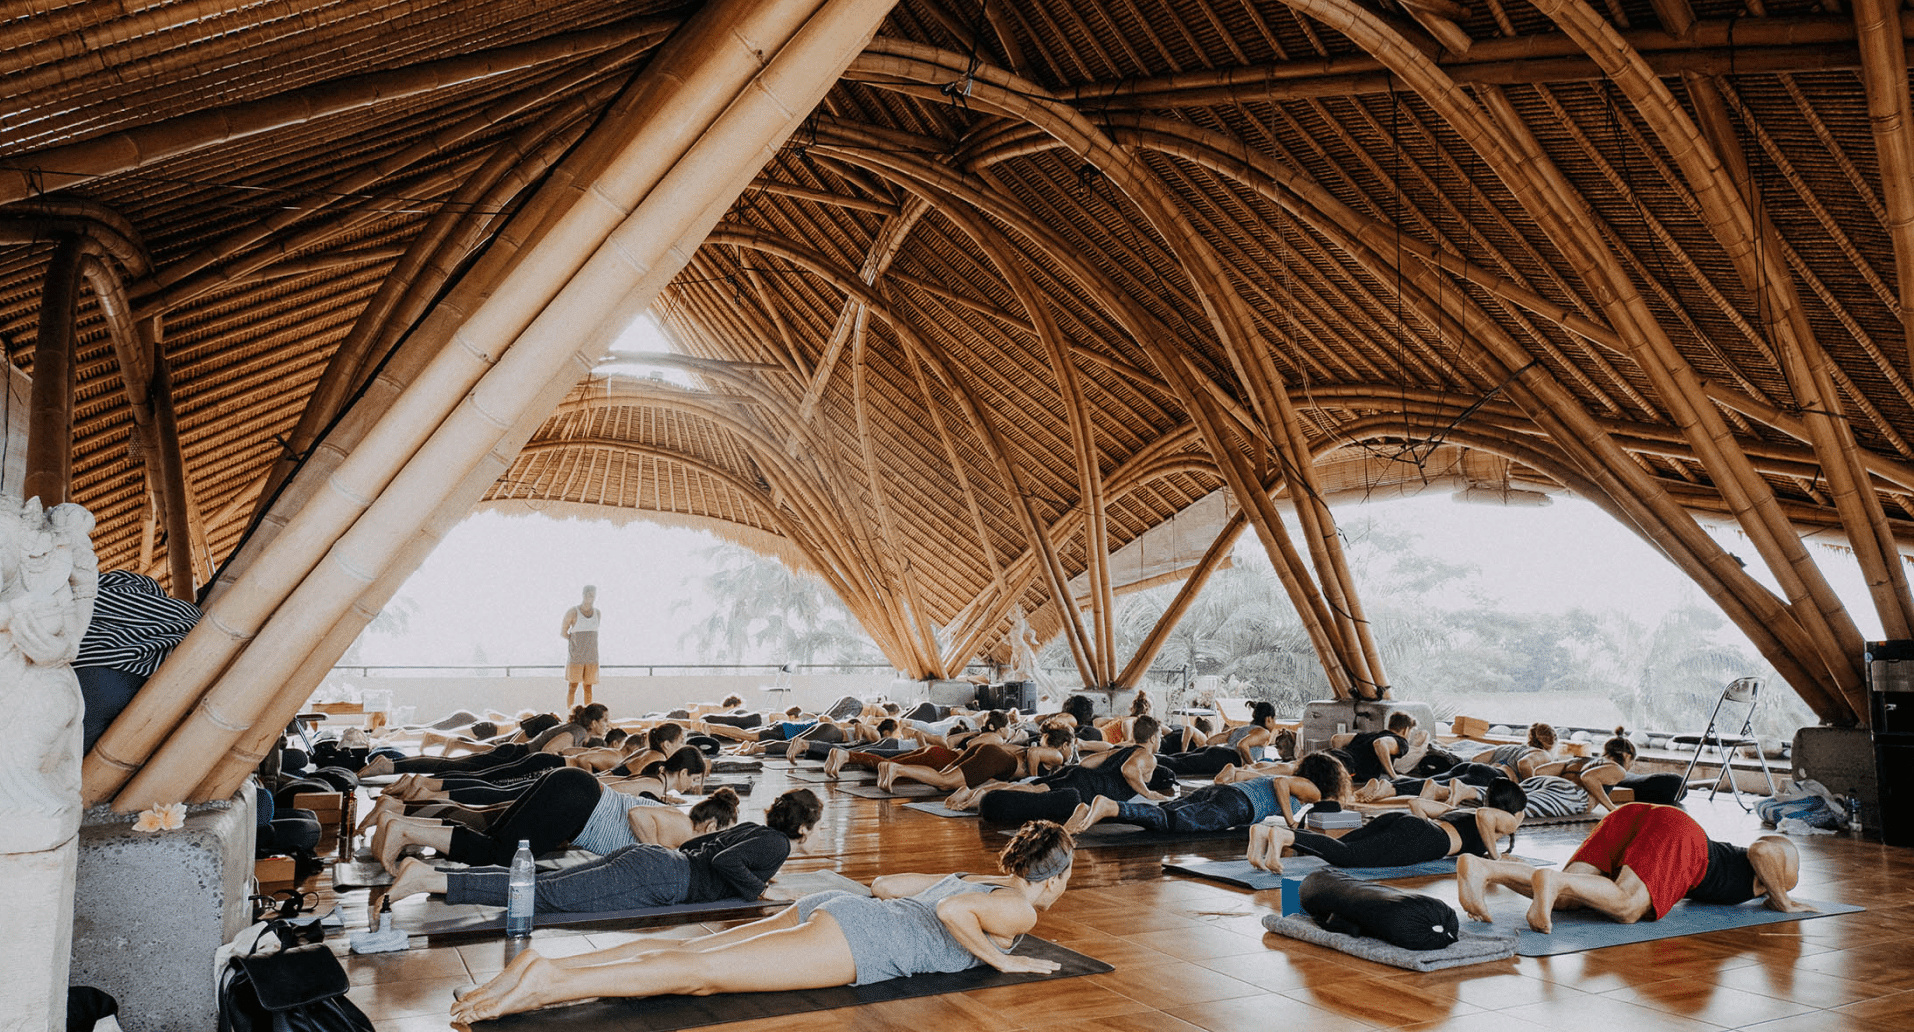 Yandara Yoga Teacher Training Retreats